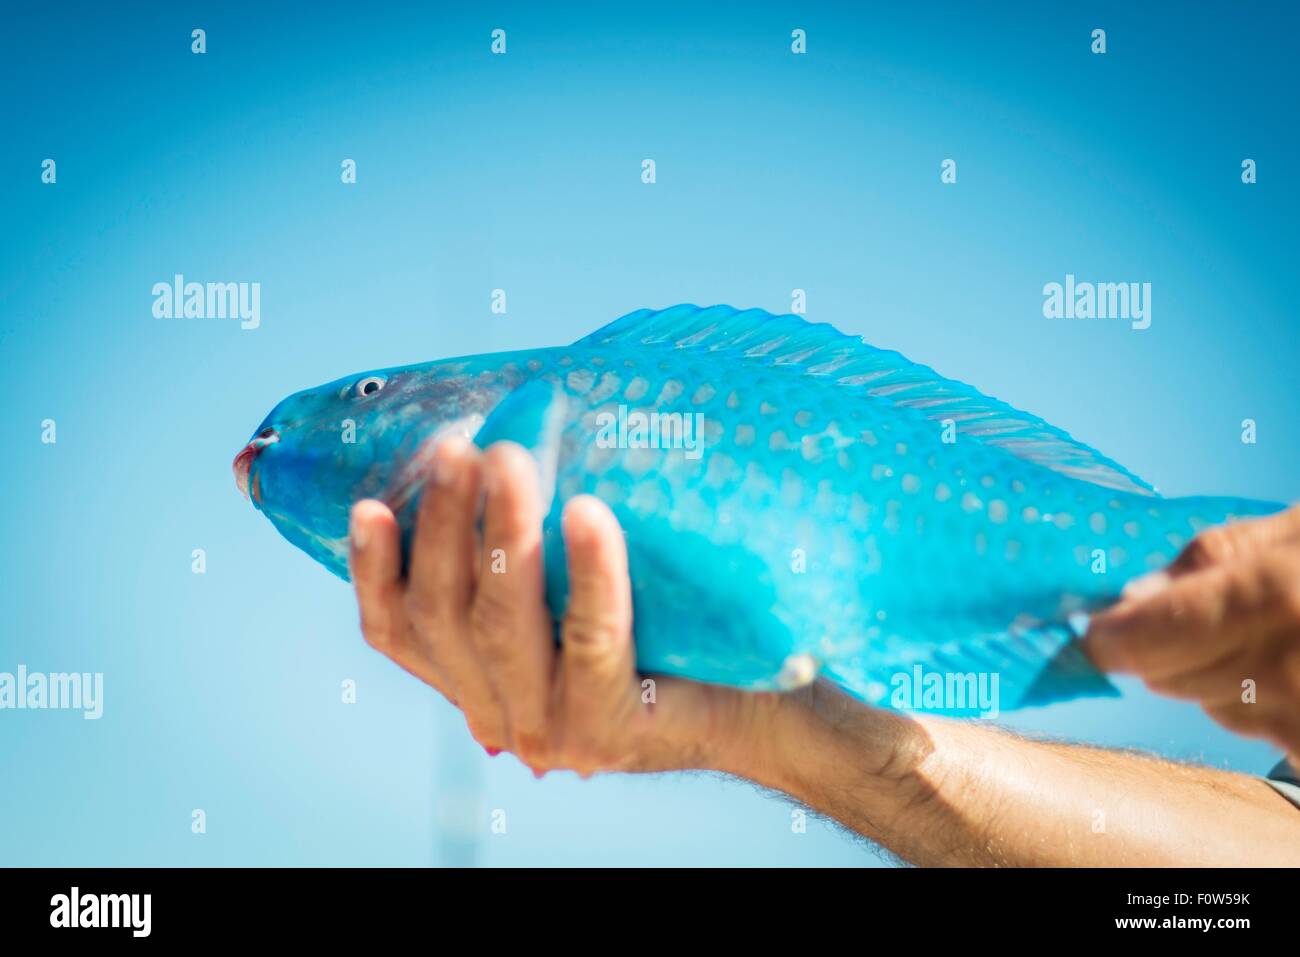 Male hand holding turquoise parrot fish, Islamorada, Florida, USA Stock Photo